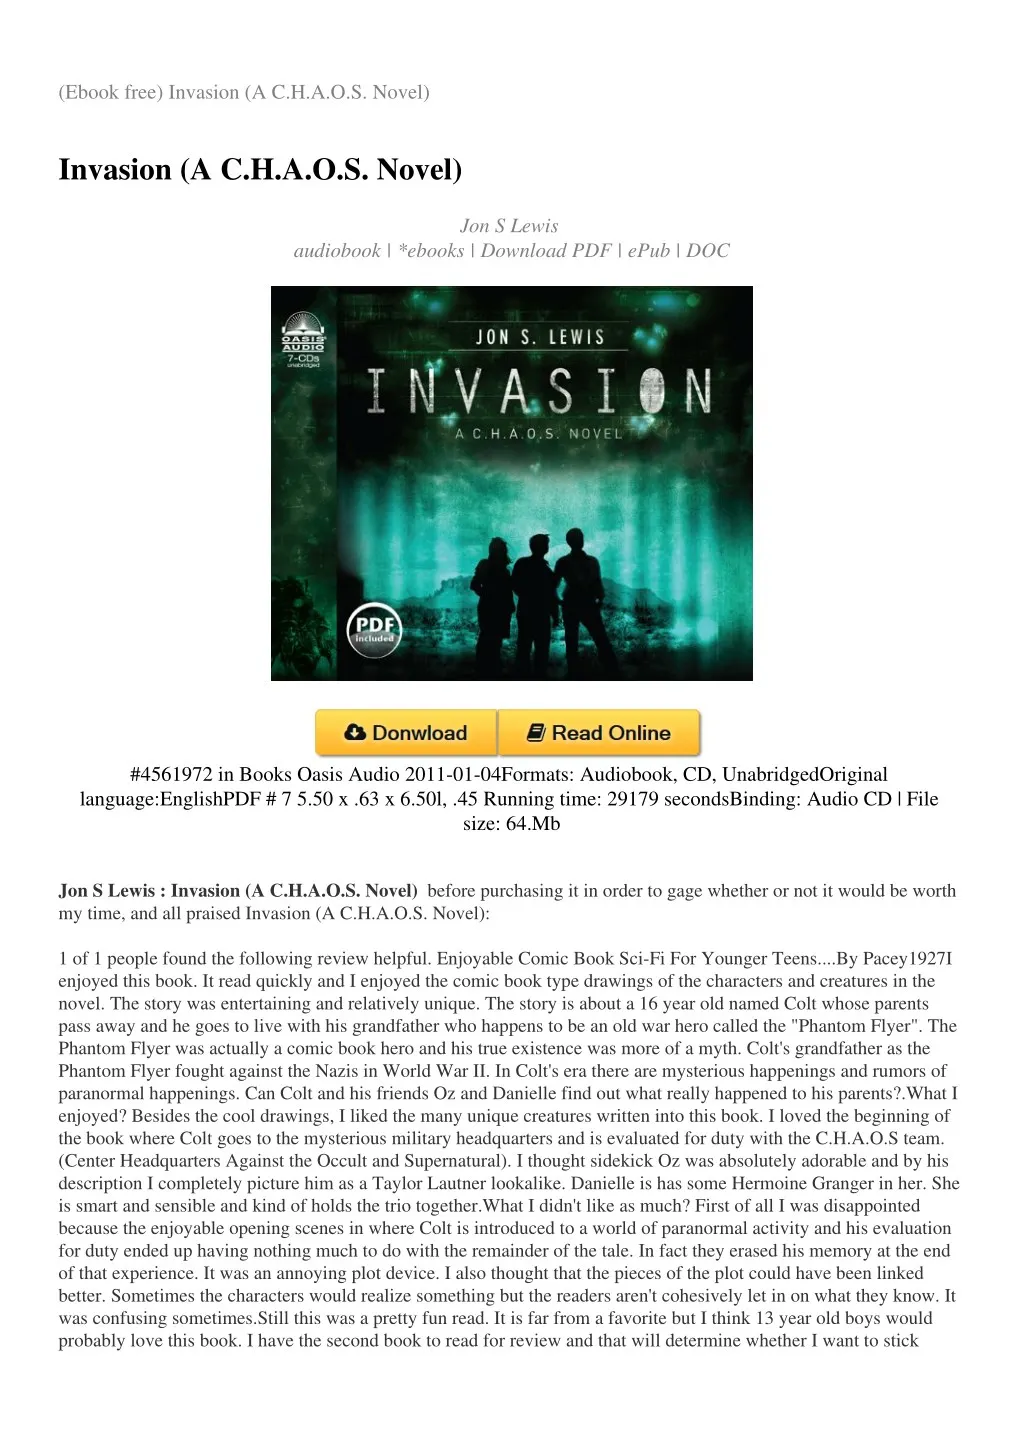 ebook free invasion a c h a o s novel